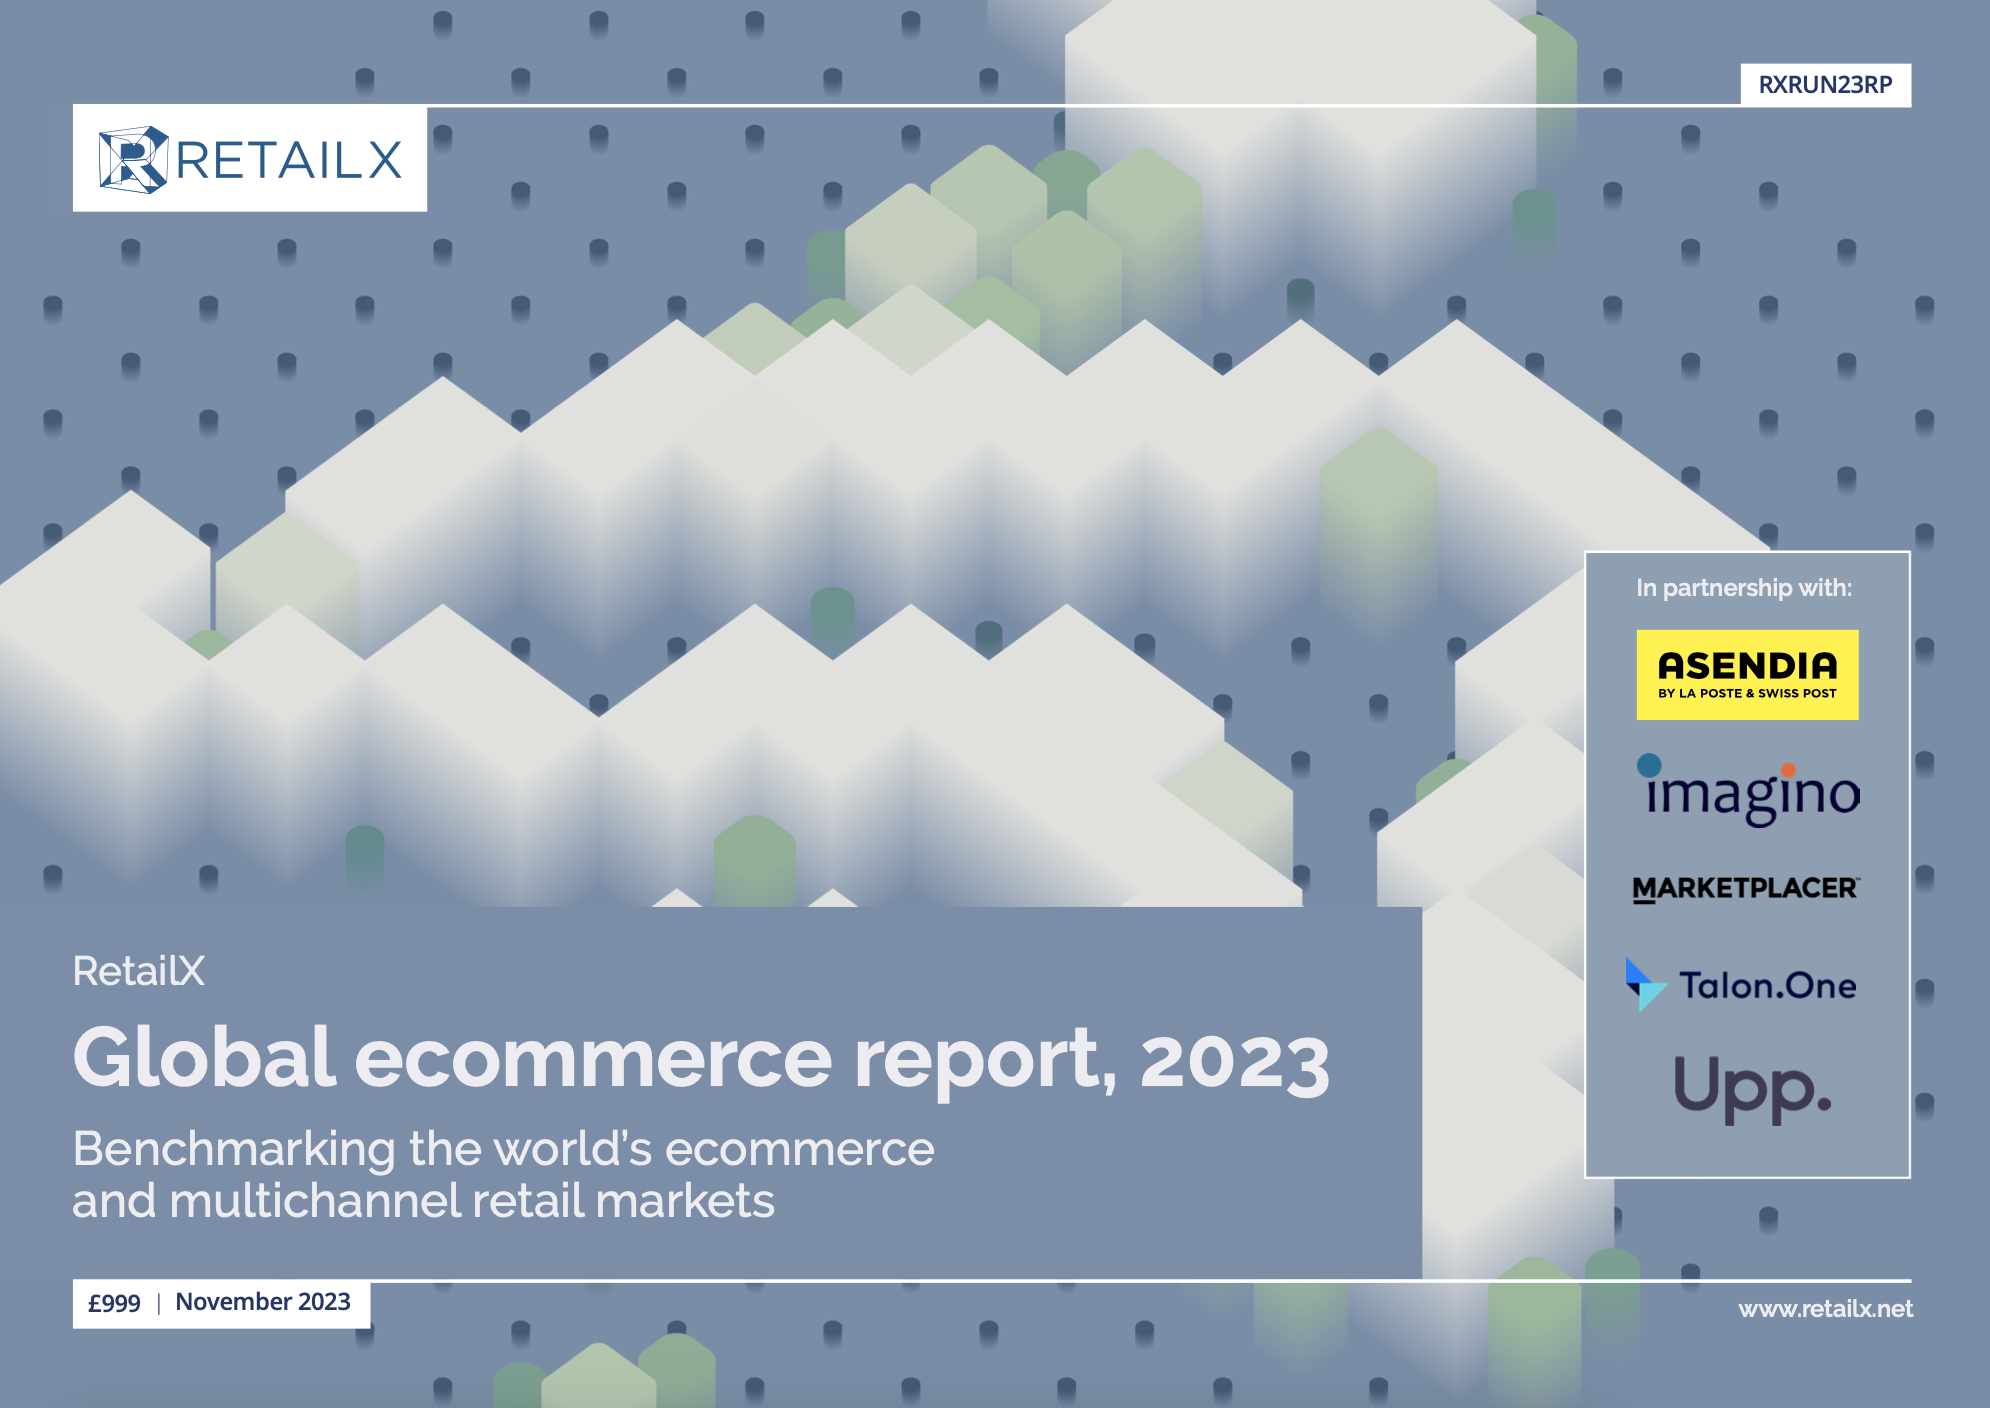 Global ecommerce report 2023 – InternetRetailing